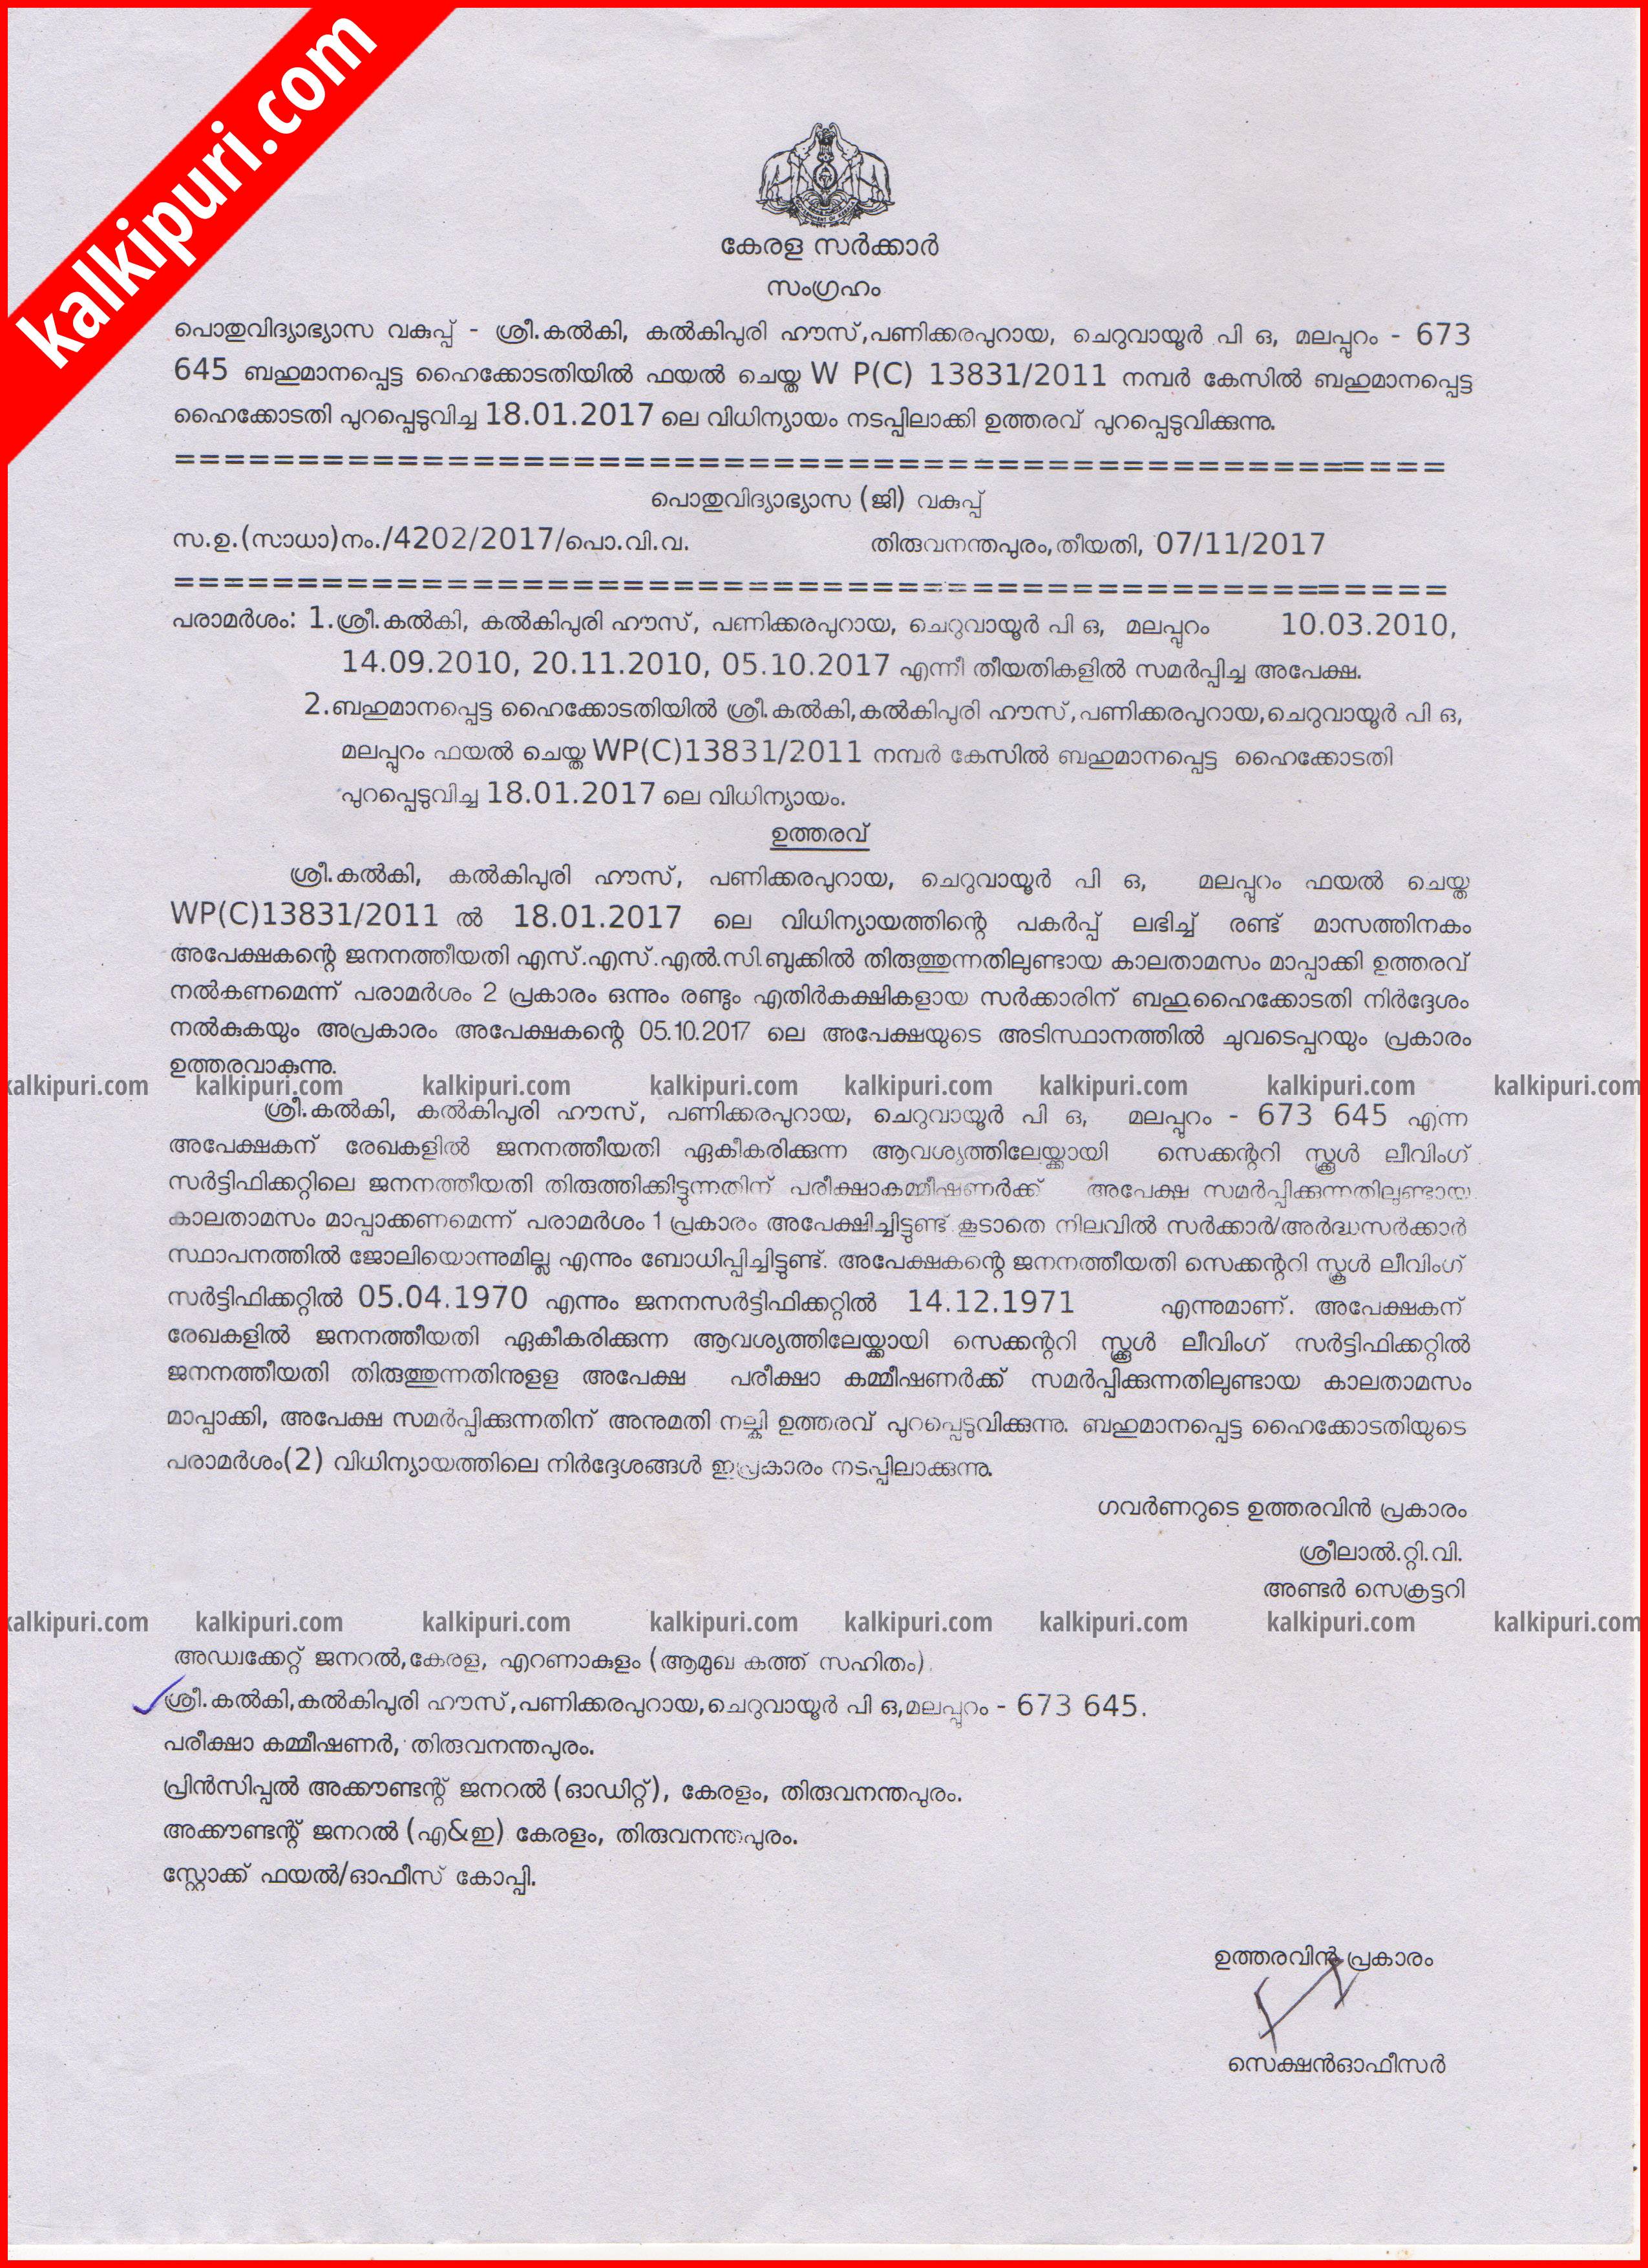 Kalki-Govt. order for date of birth correction in S.S.L.C book as per birth certificate.